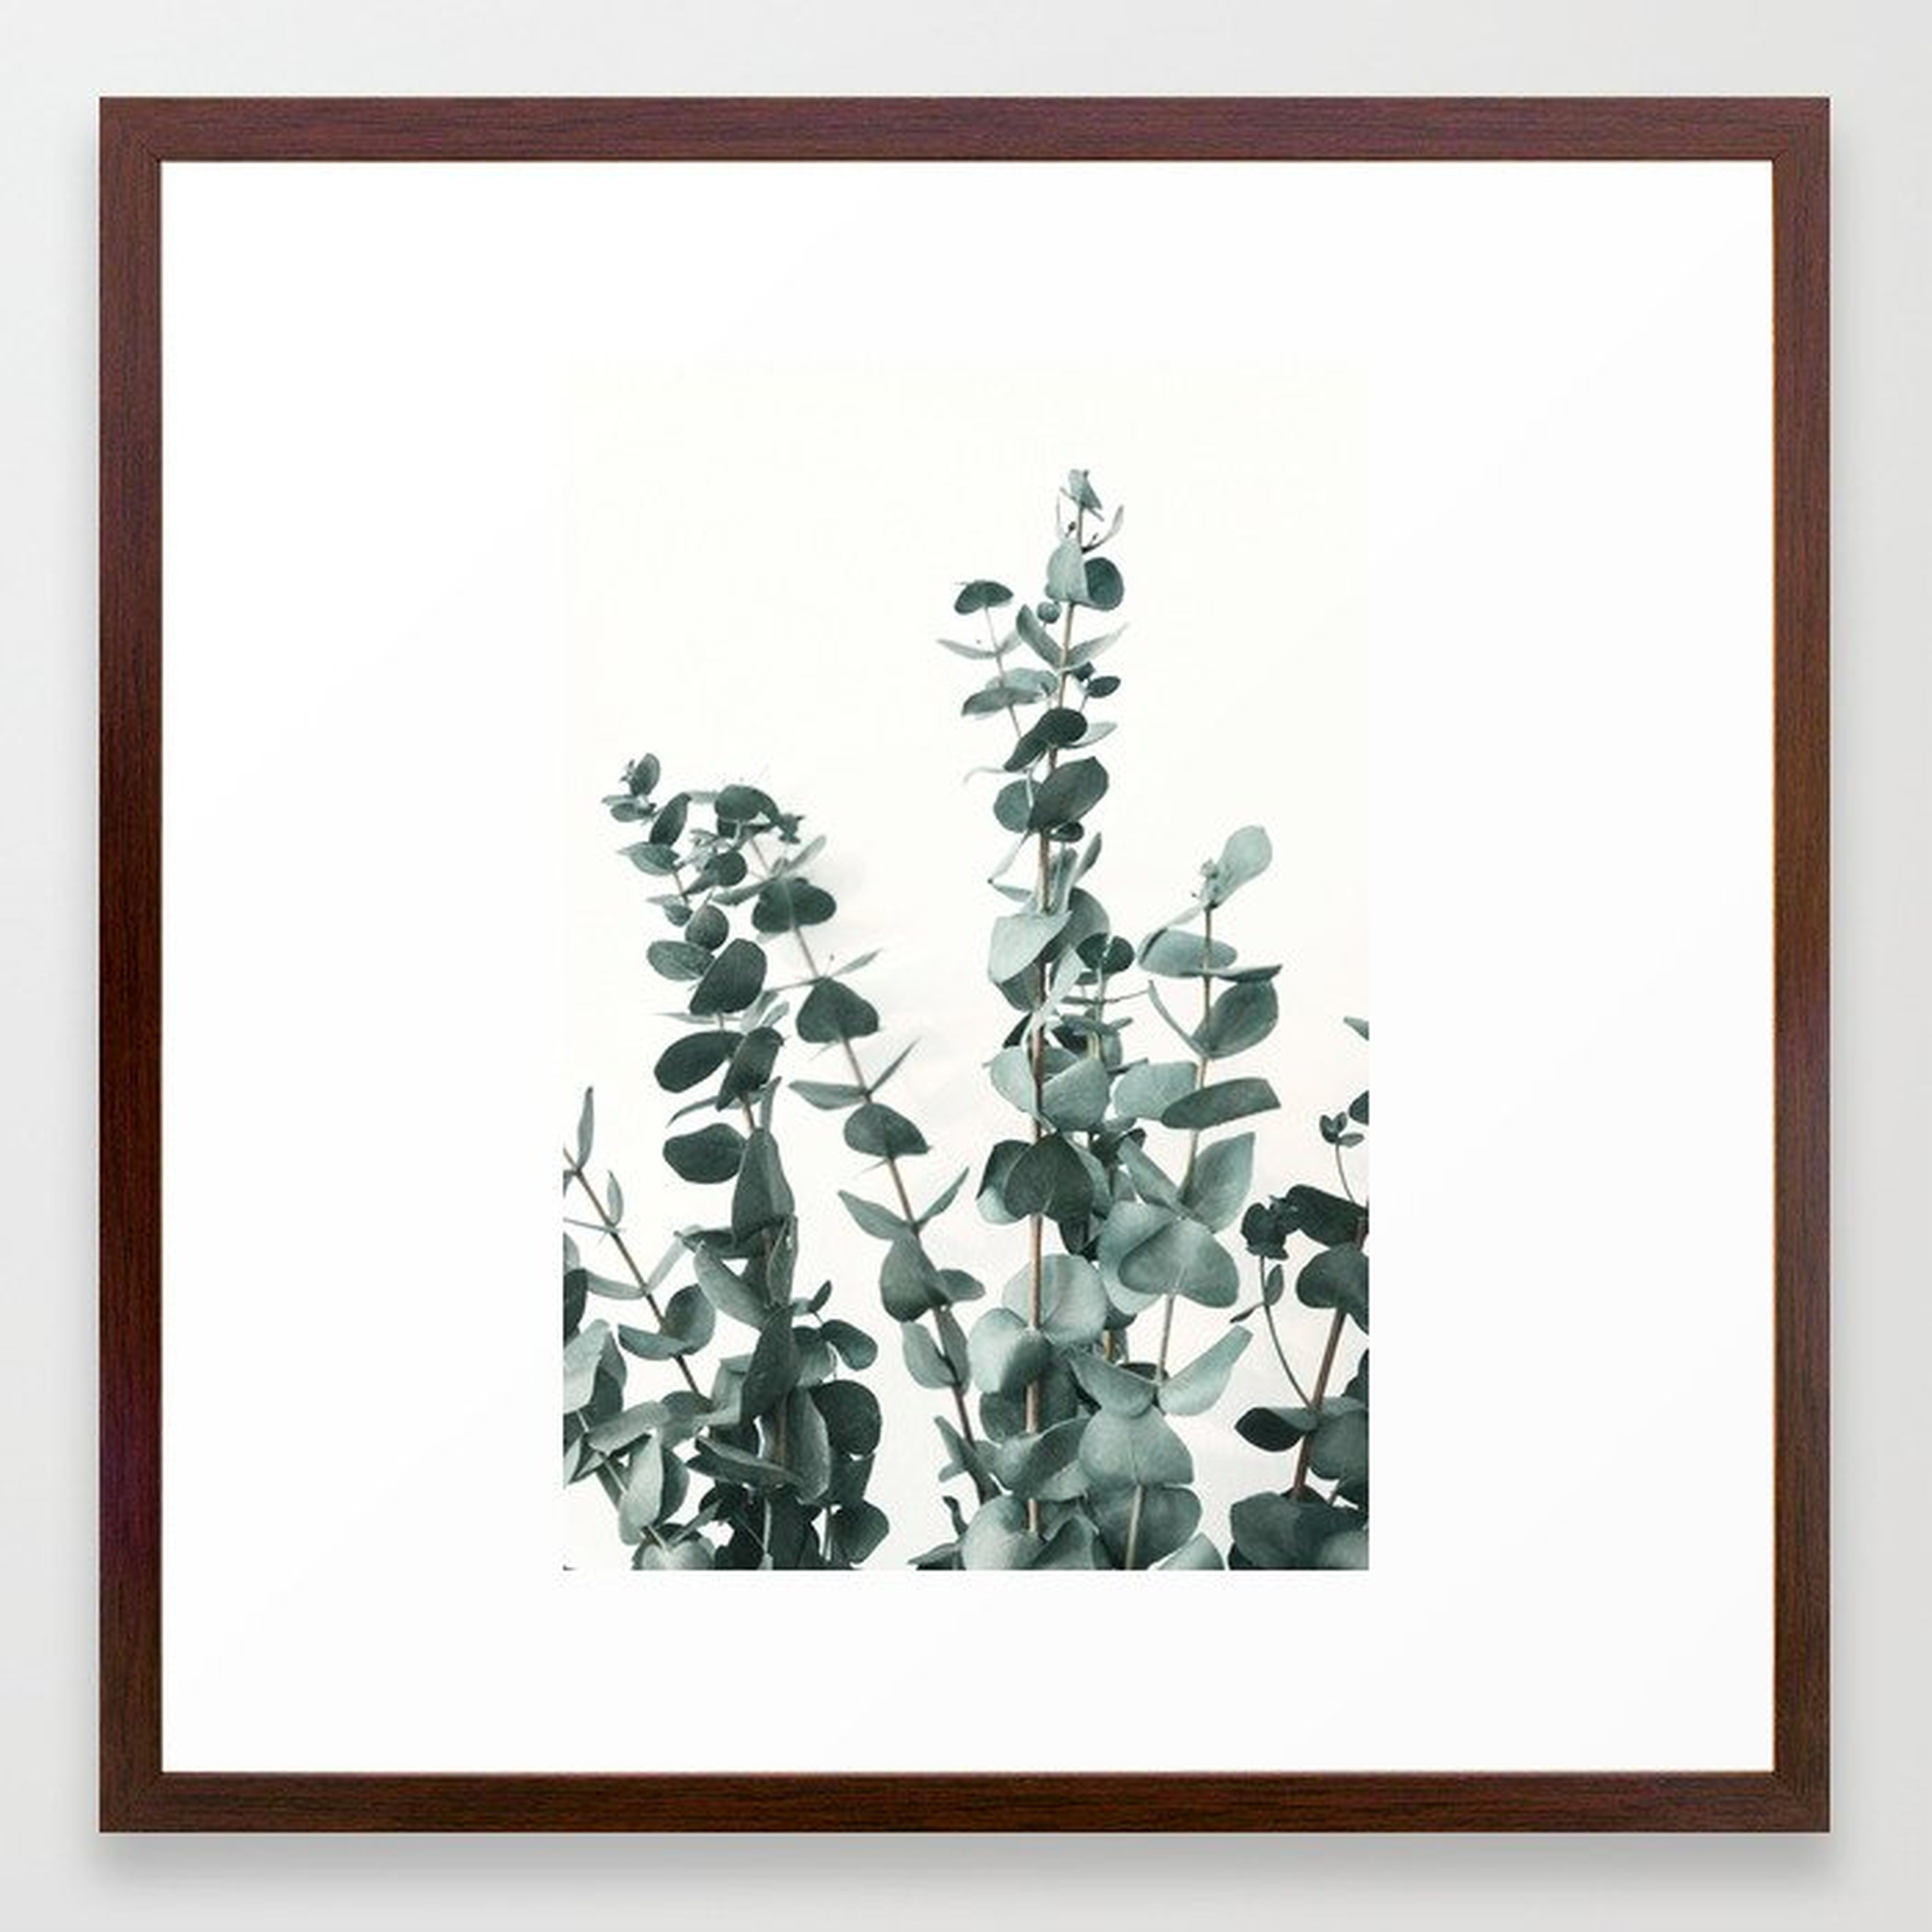 Eucalyptus Leaves Framed Art Print - 22 x 22 - Conservative Walnut Frame - Society6